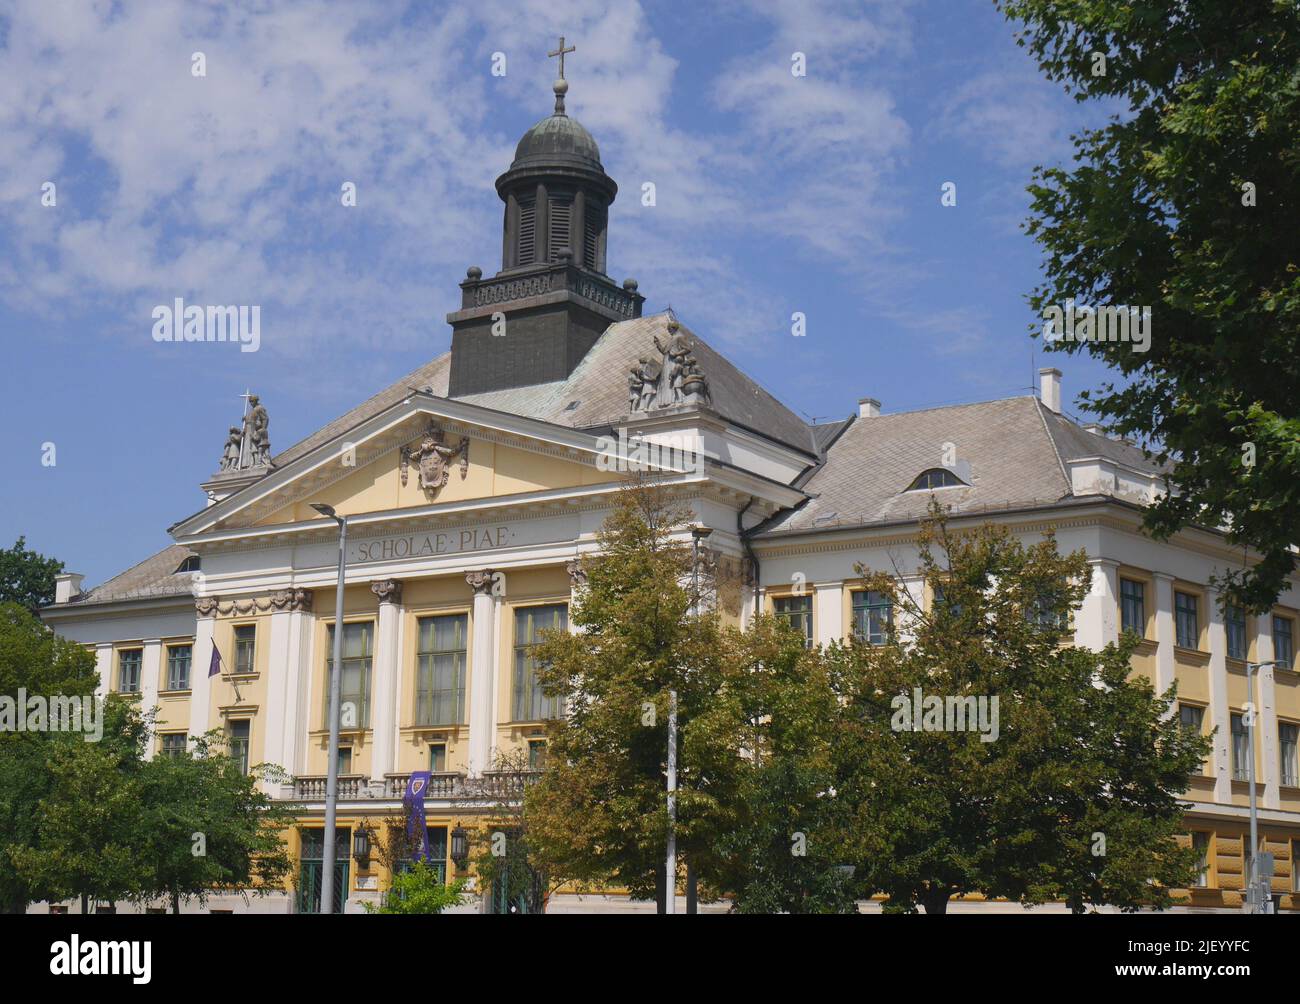 Piarist High School, Piaristak tere, Piarist Square, Kecskemet, Hungary Stock Photo